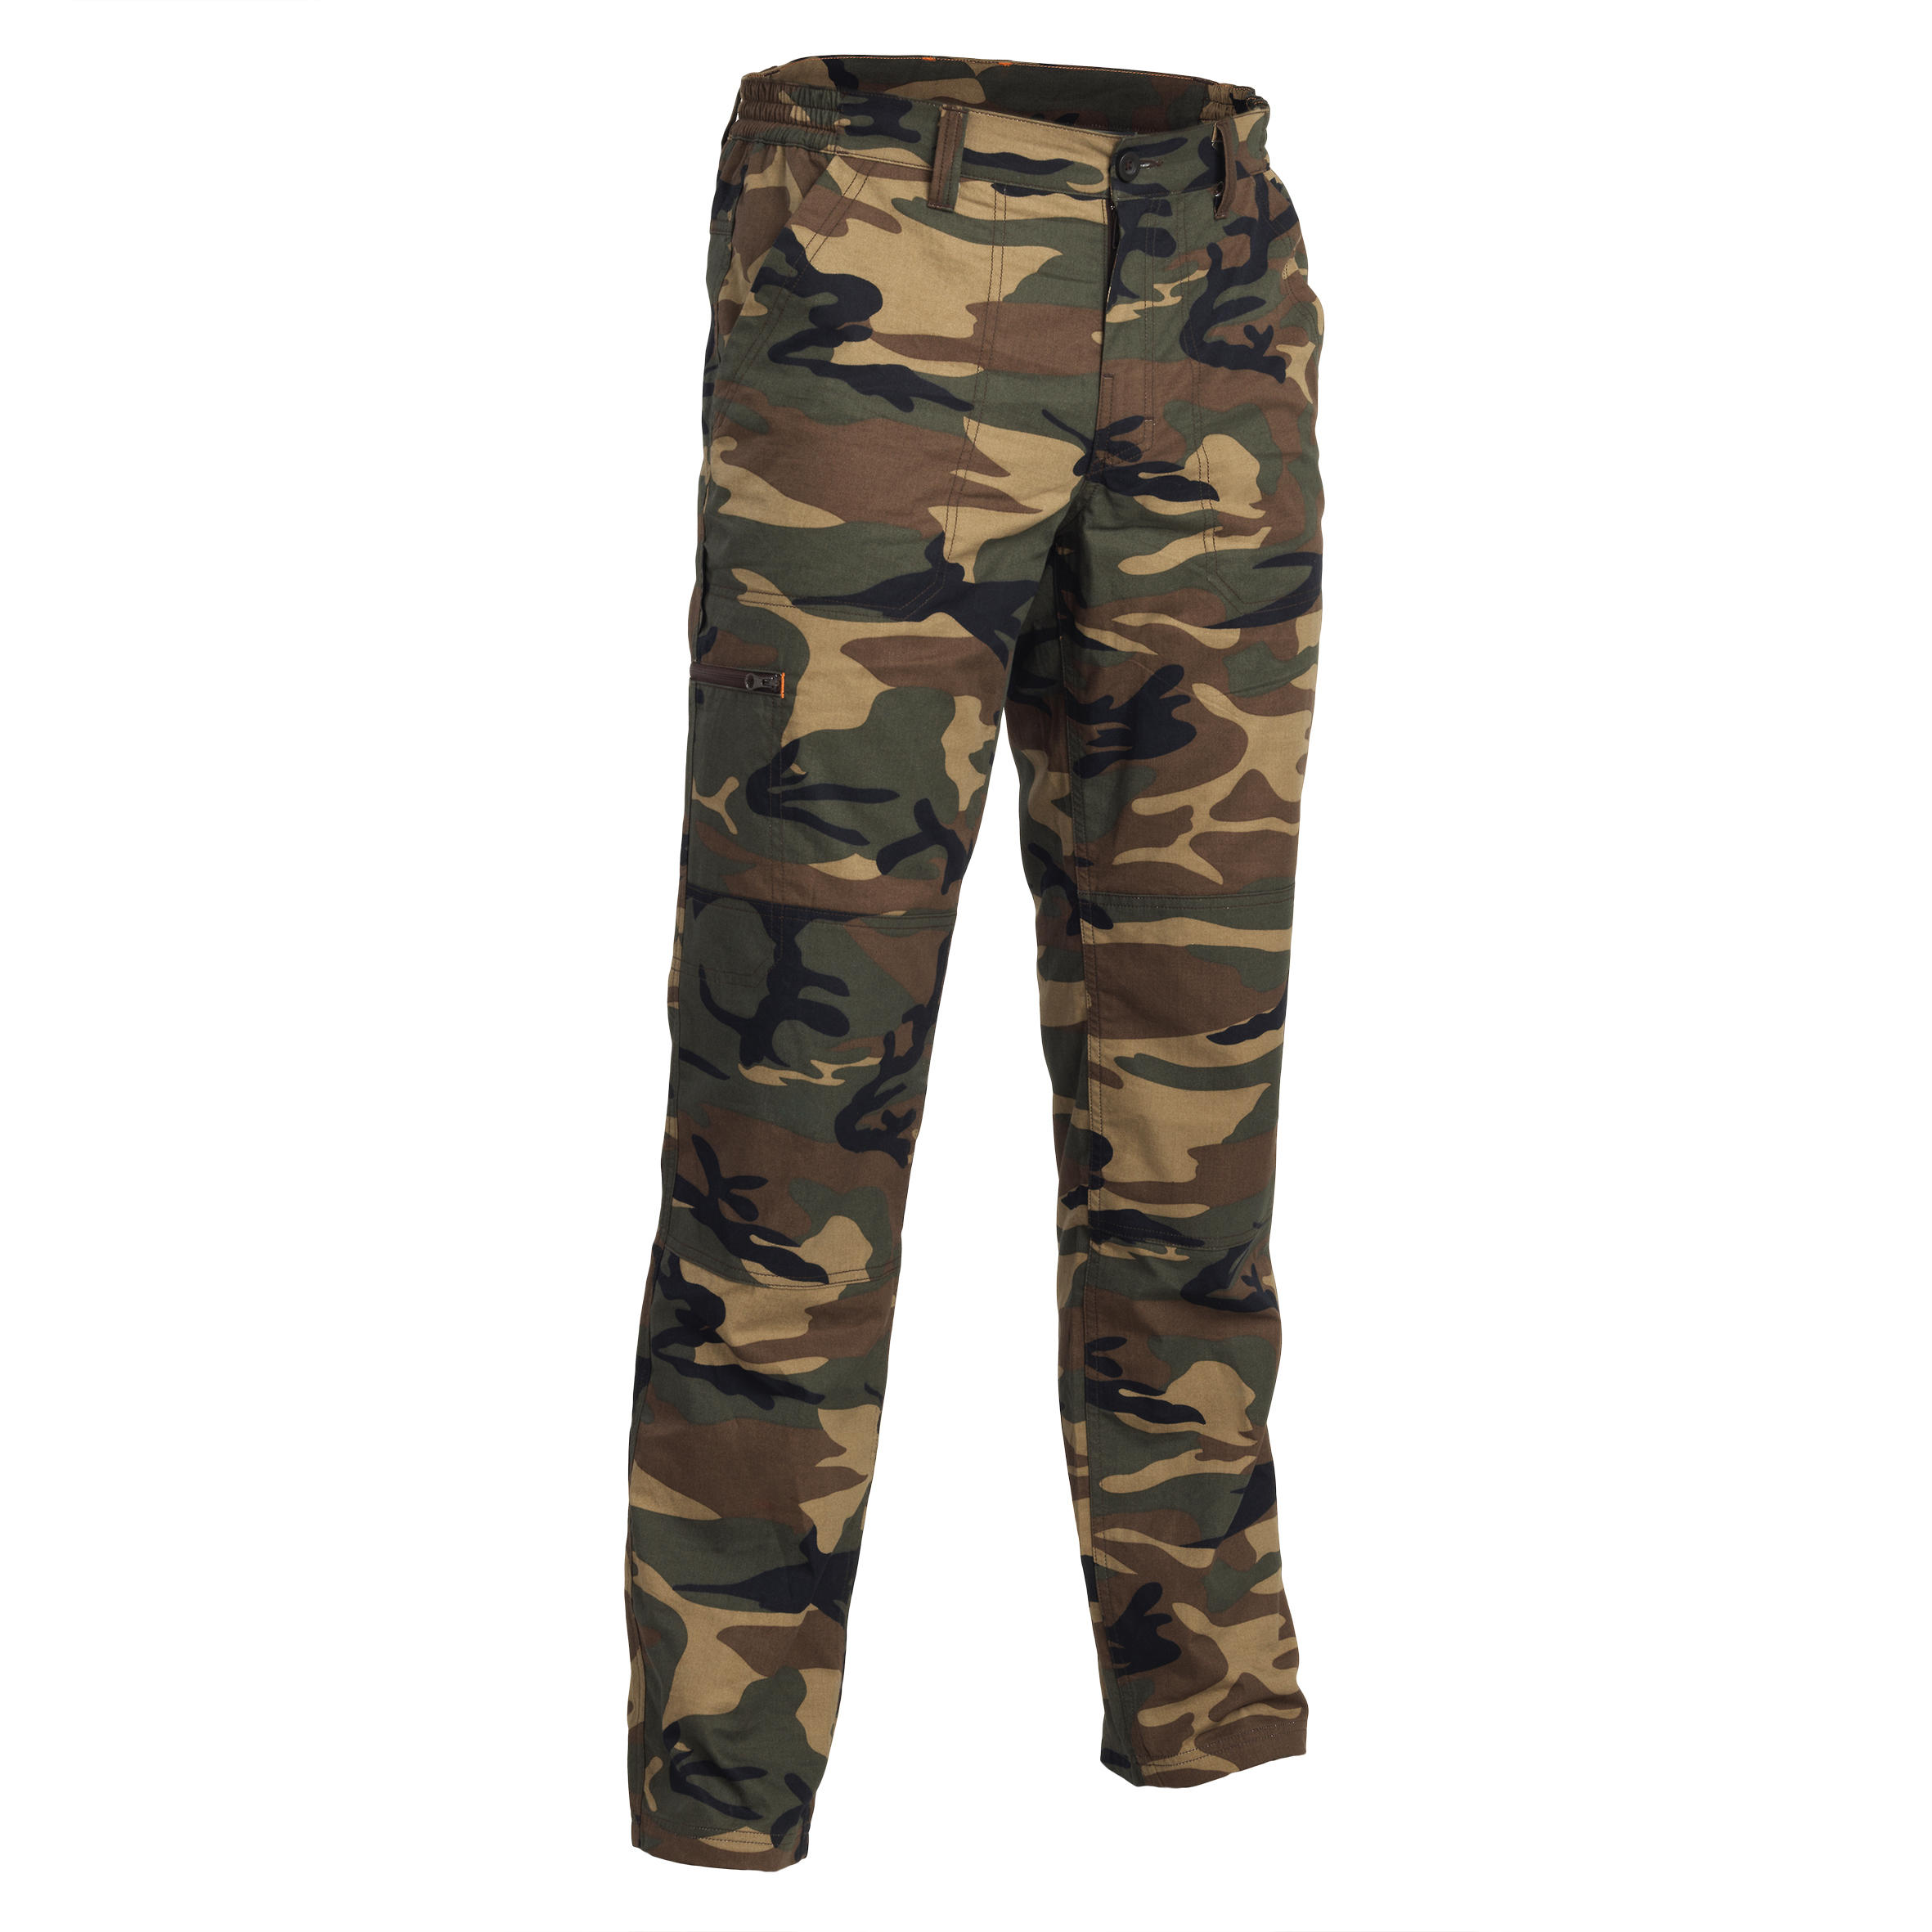 Light hunting camouflage pants 100 island green - Decathlon